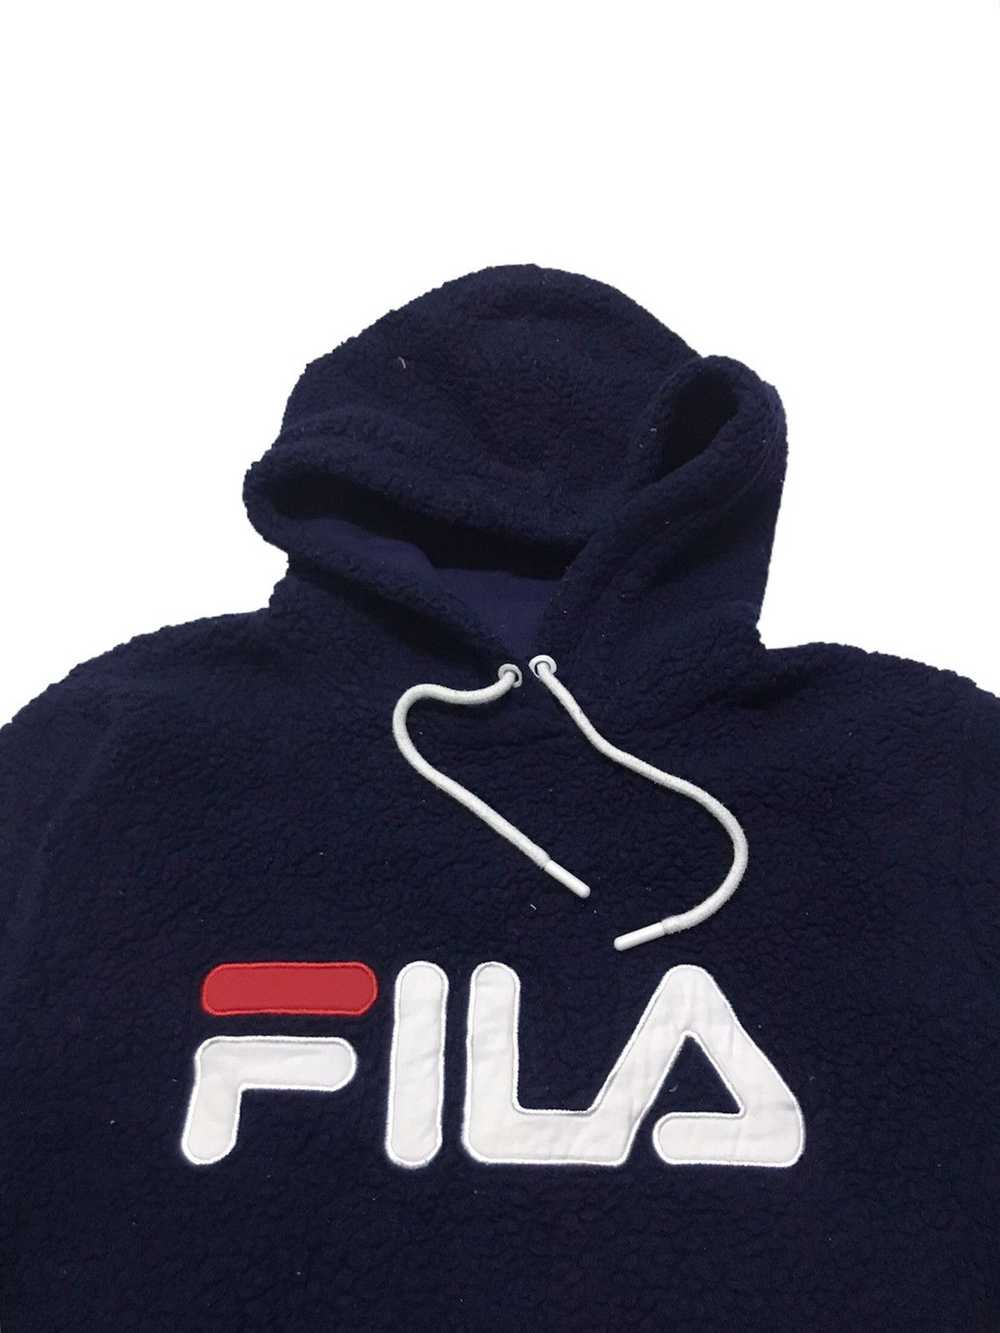 Fila Fila fleece hoodie - image 2